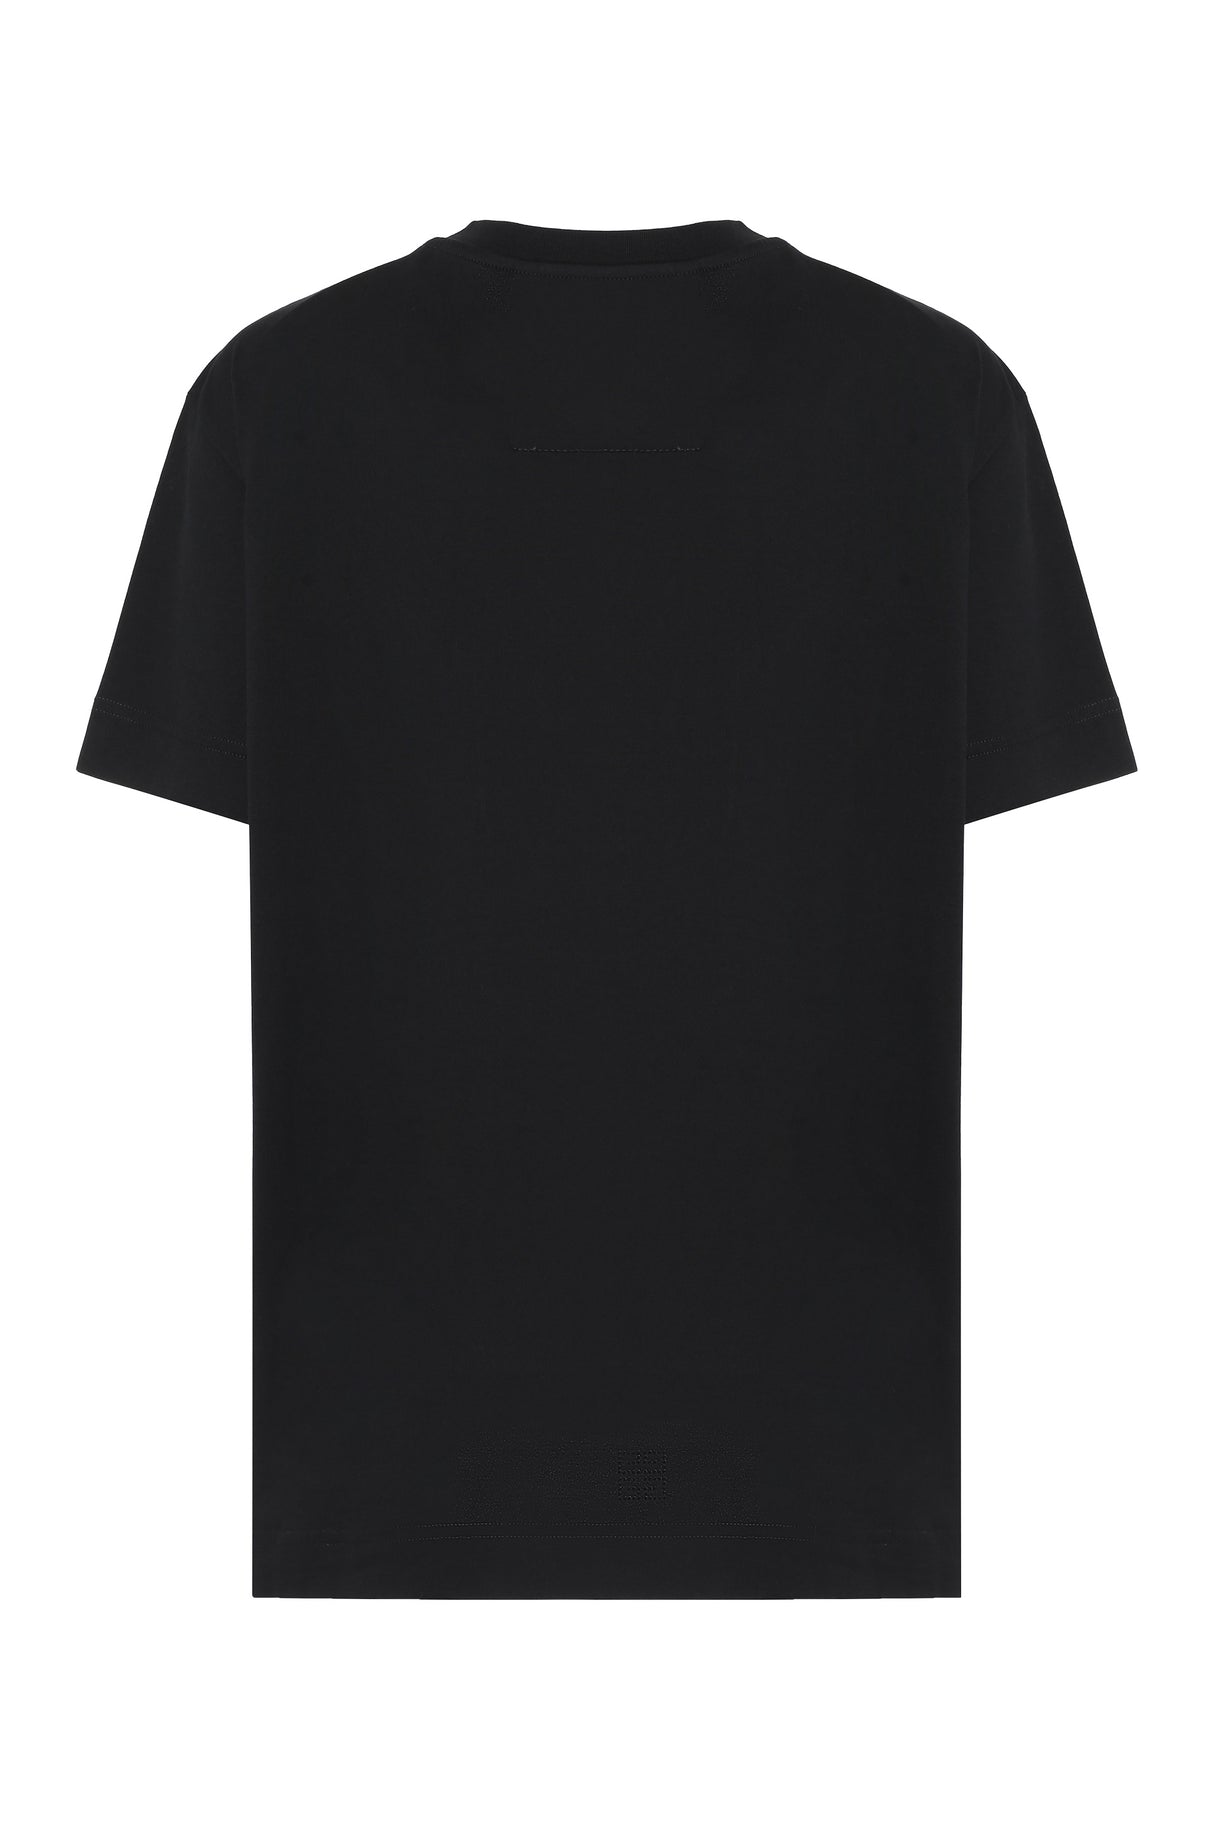 Rhinestonesロゴ シリーズFW23 コレクション 100% コットン Tシャツ